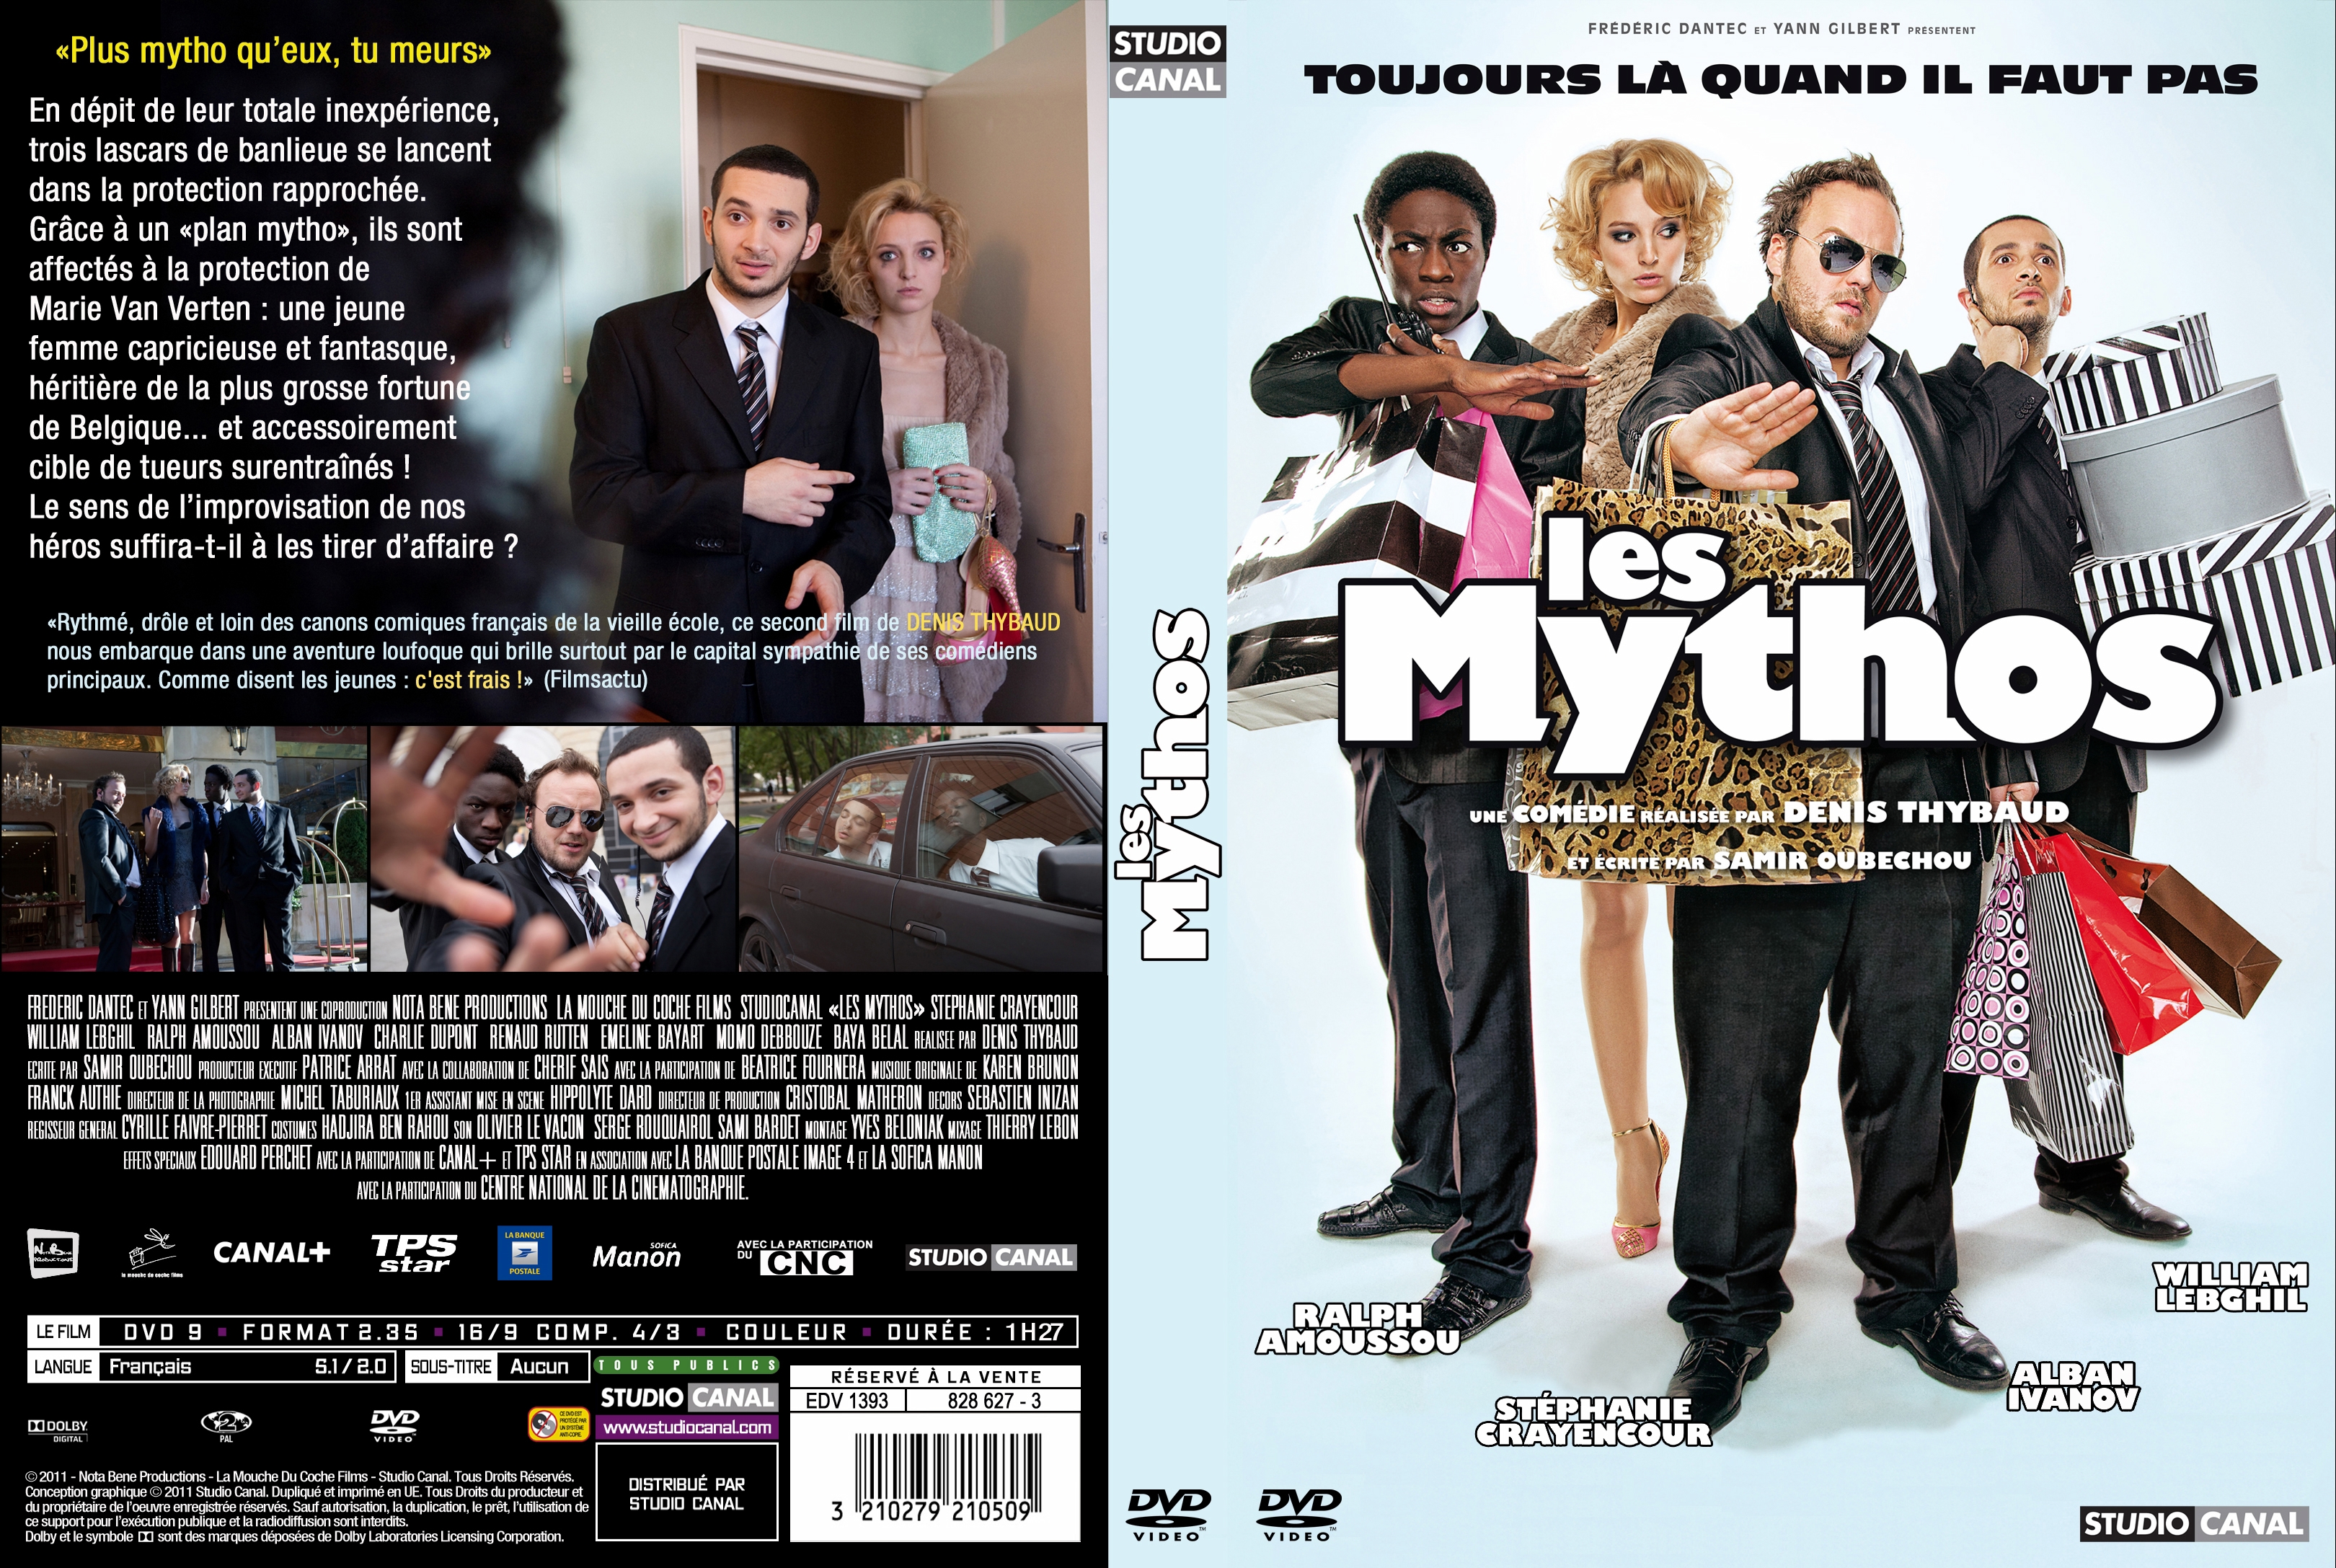 Jaquette DVD Les Mythos custom